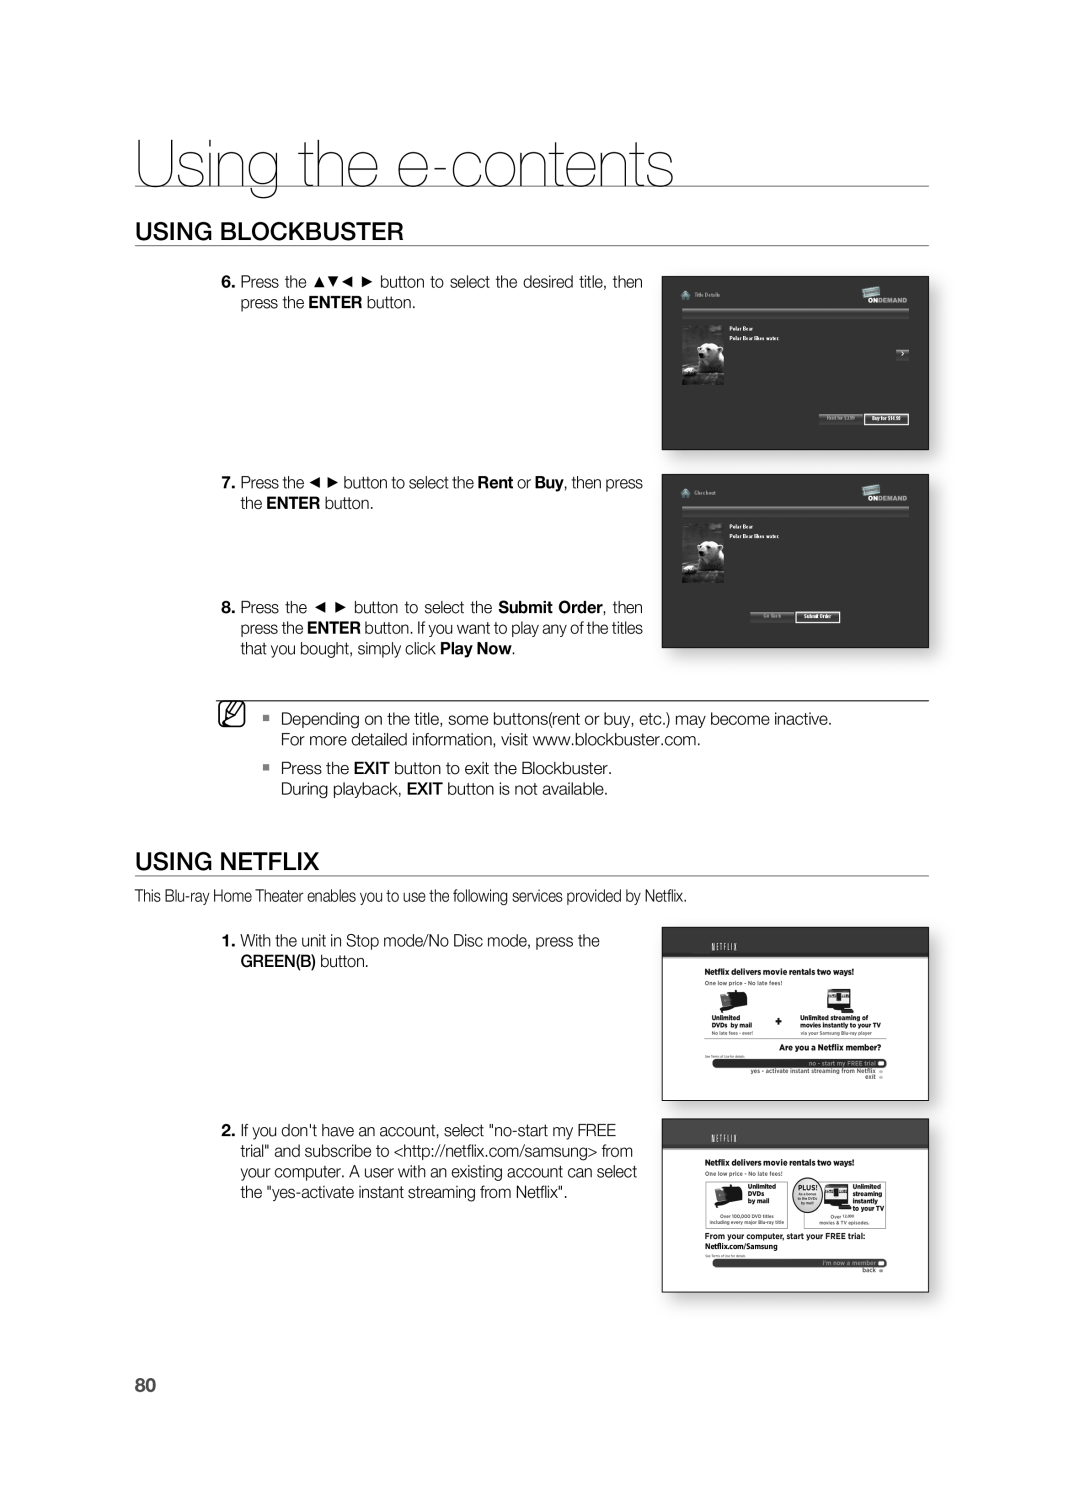 Samsung HT-BD8200 user manual Using Netflix, Using the e-contents, Using Blockbuster, Netflix.com/Samsung 